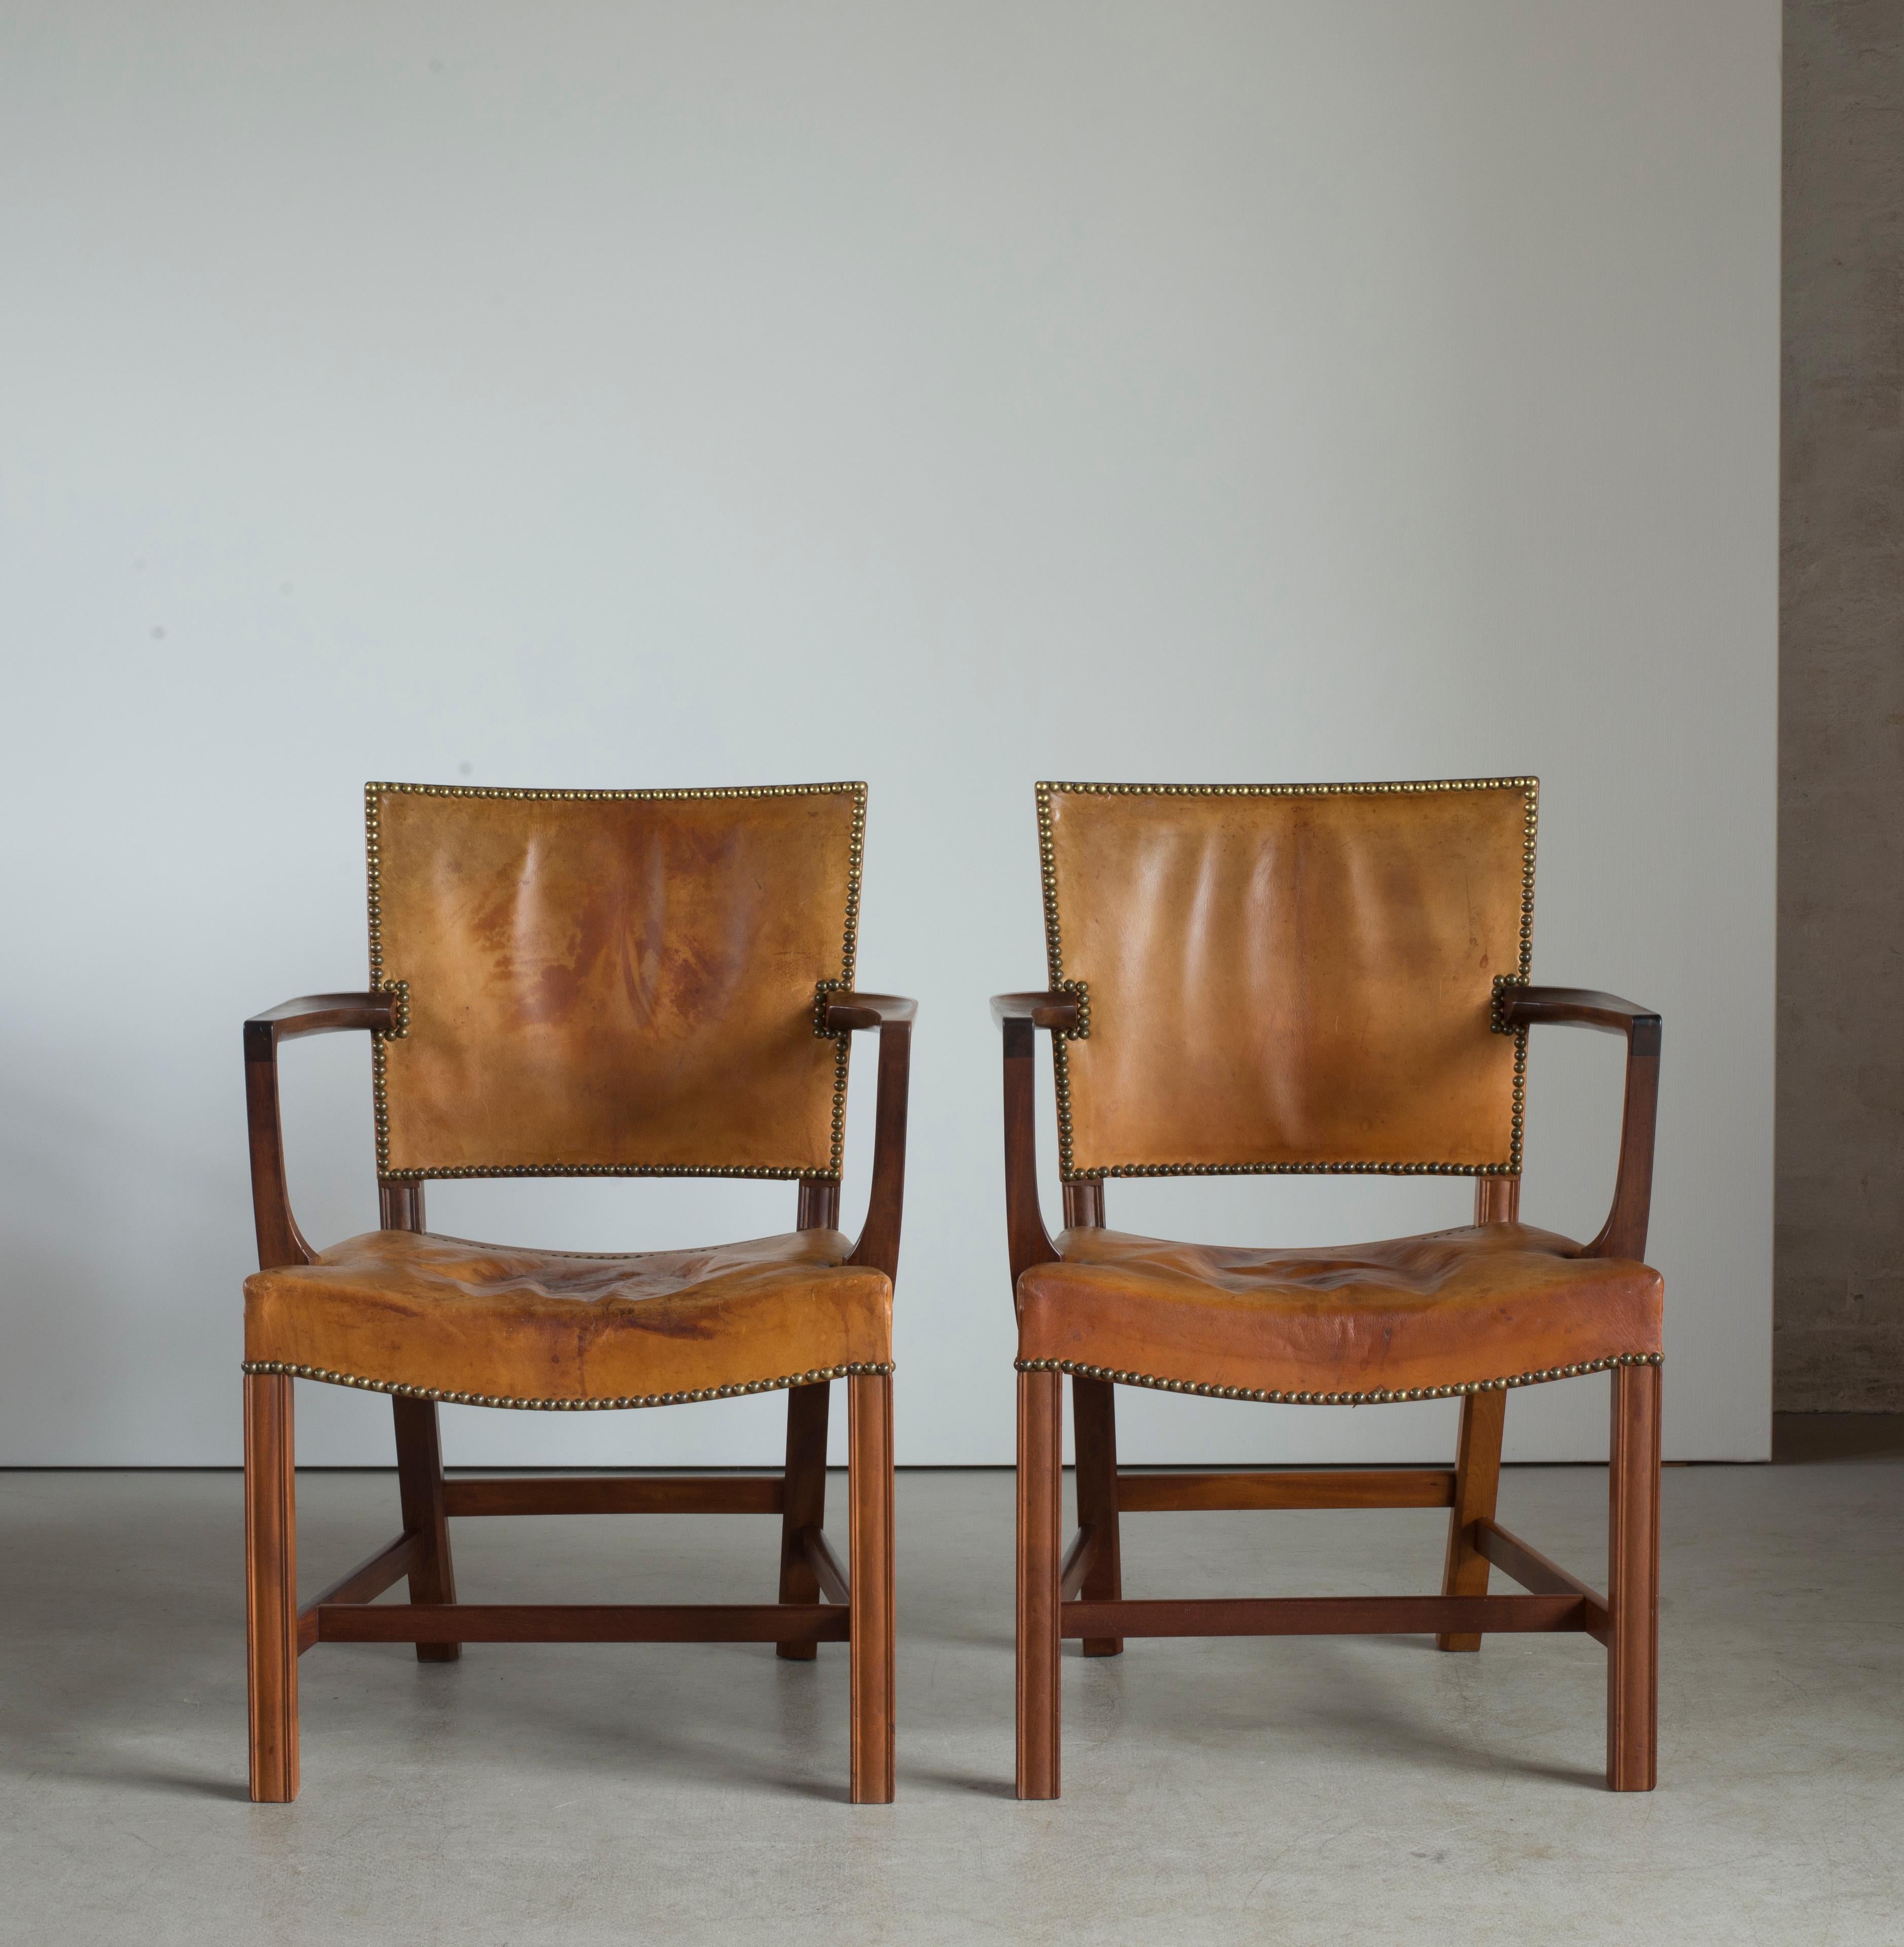 Pair of Kaare Klint armchairs in Cuban mahogany and Niger leather. Executed by Rud. Rasmussen, 1930s.

Reverse with paper label ‘RUD. RASMUSSEN/SNEDKERIER/45 NØRREBROGADE/KØBENHAVN.